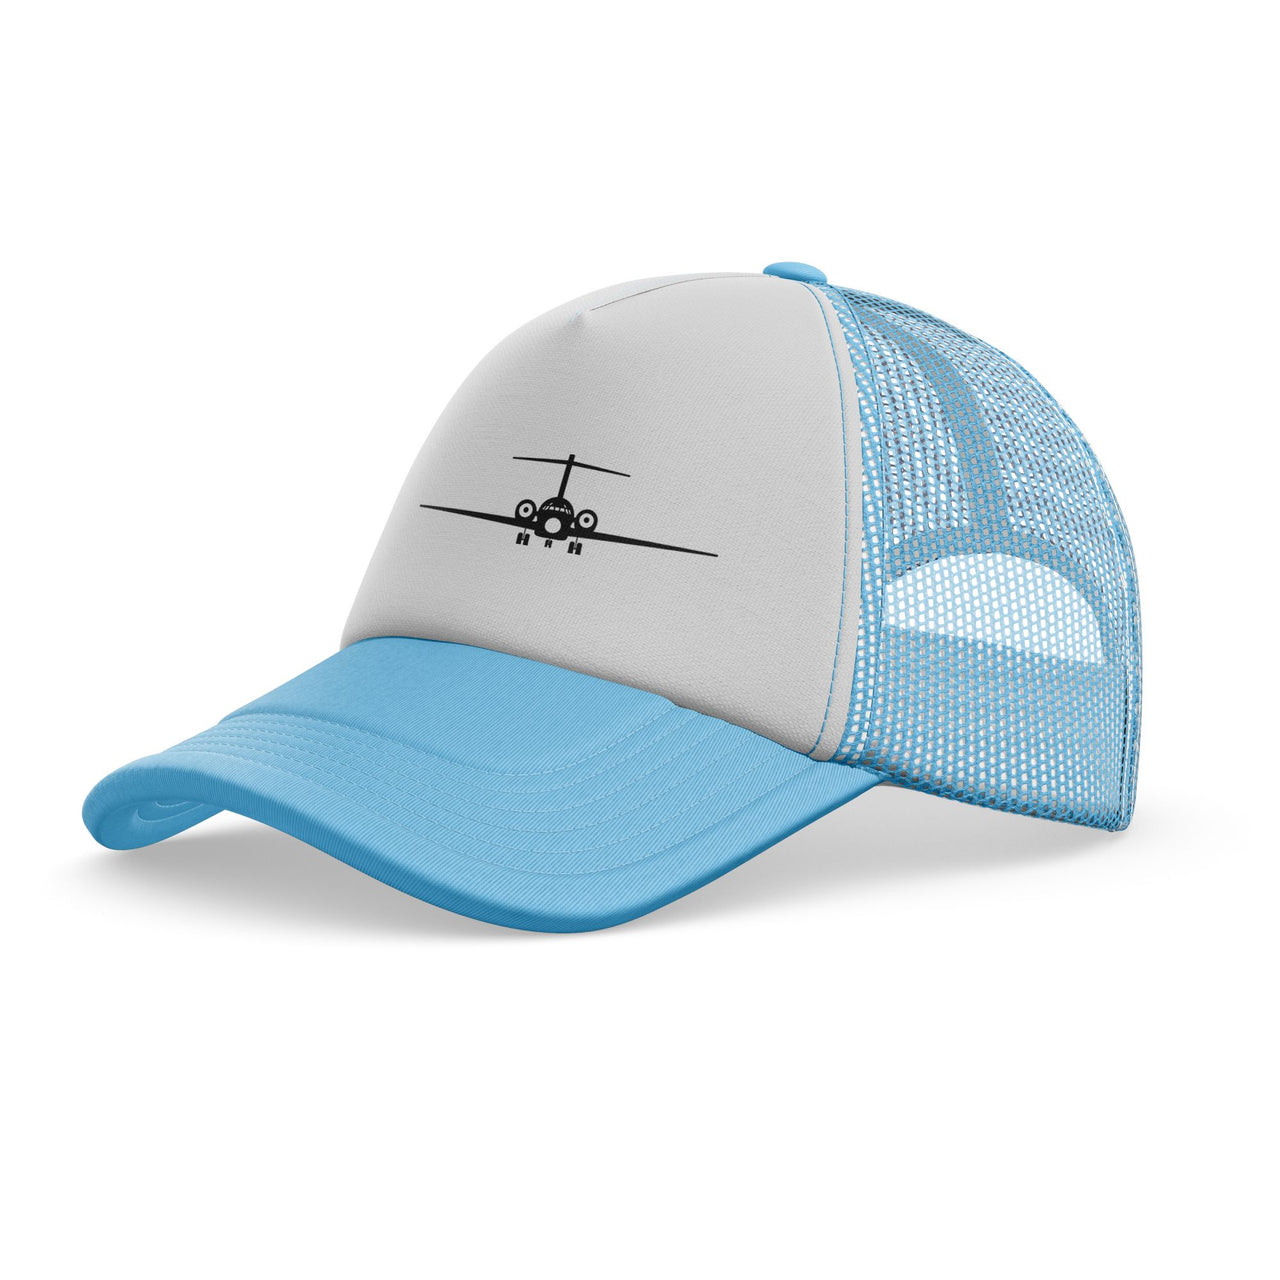 Boeing 717 Silhouette Designed Trucker Caps & Hats